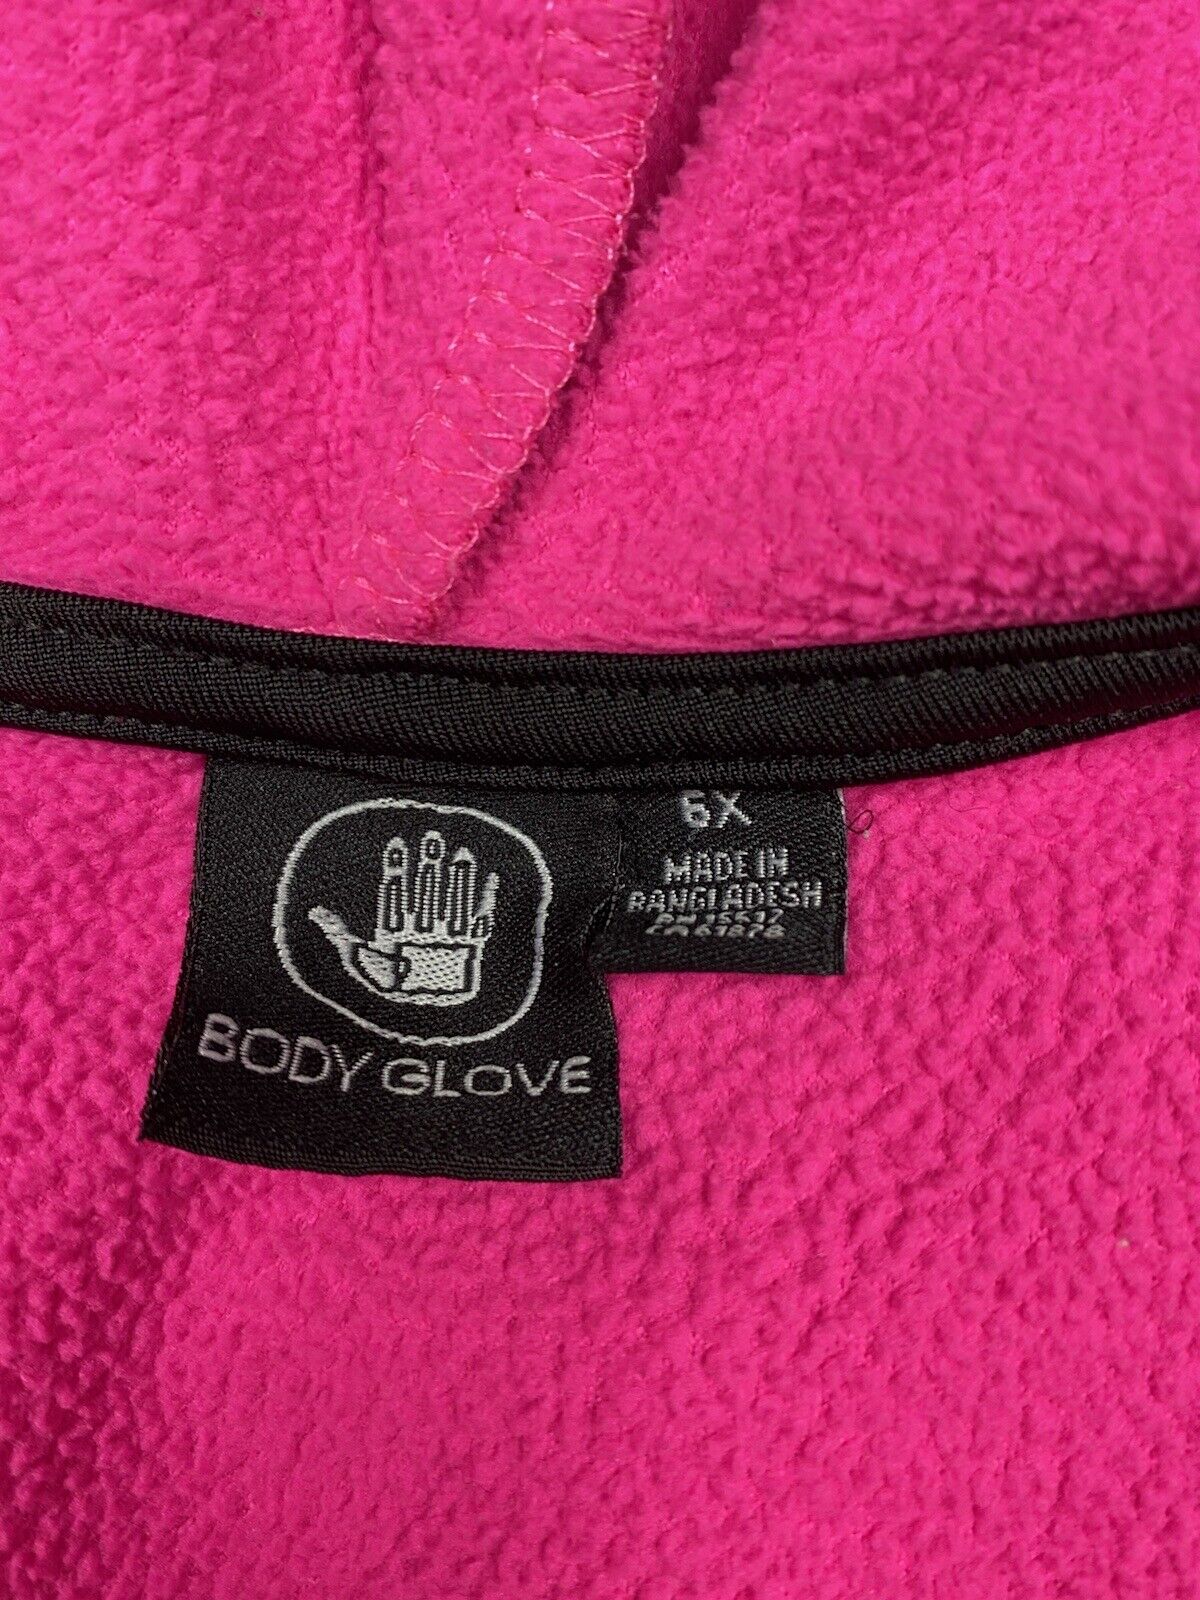 BODY GLOVES Hooded Jacket Full Zip Girls Youth Size 6X School Free Shipping  Body Glove - фотография #2